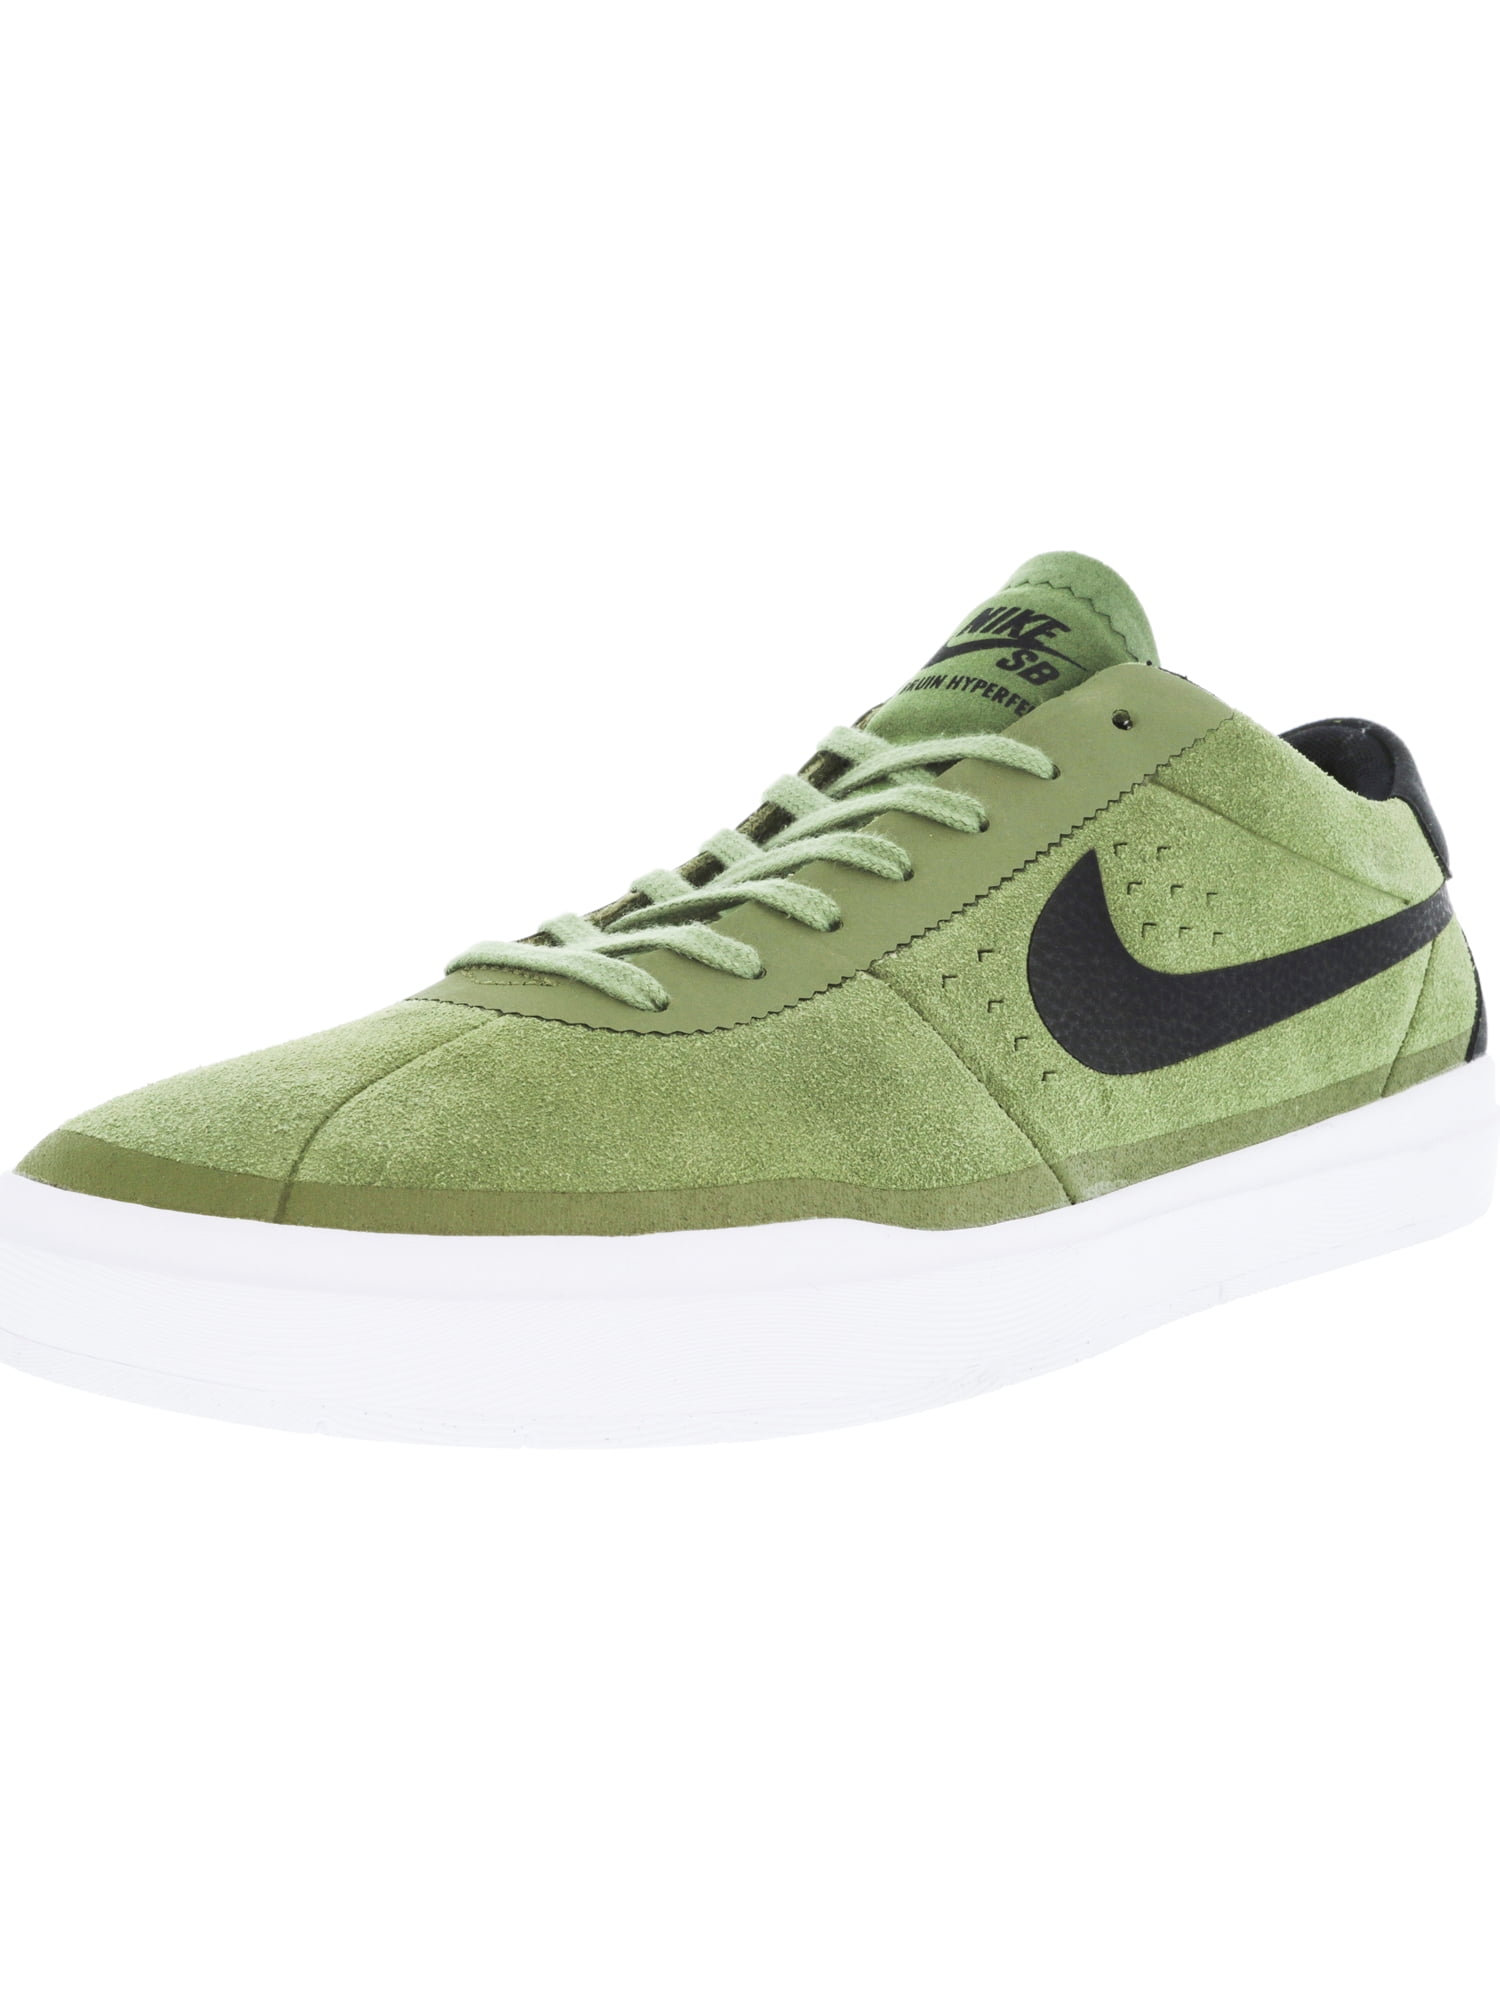 Nike Men's Sb Bruin Hyperfeel Palm Green / Black White Ankle-High Suede ...